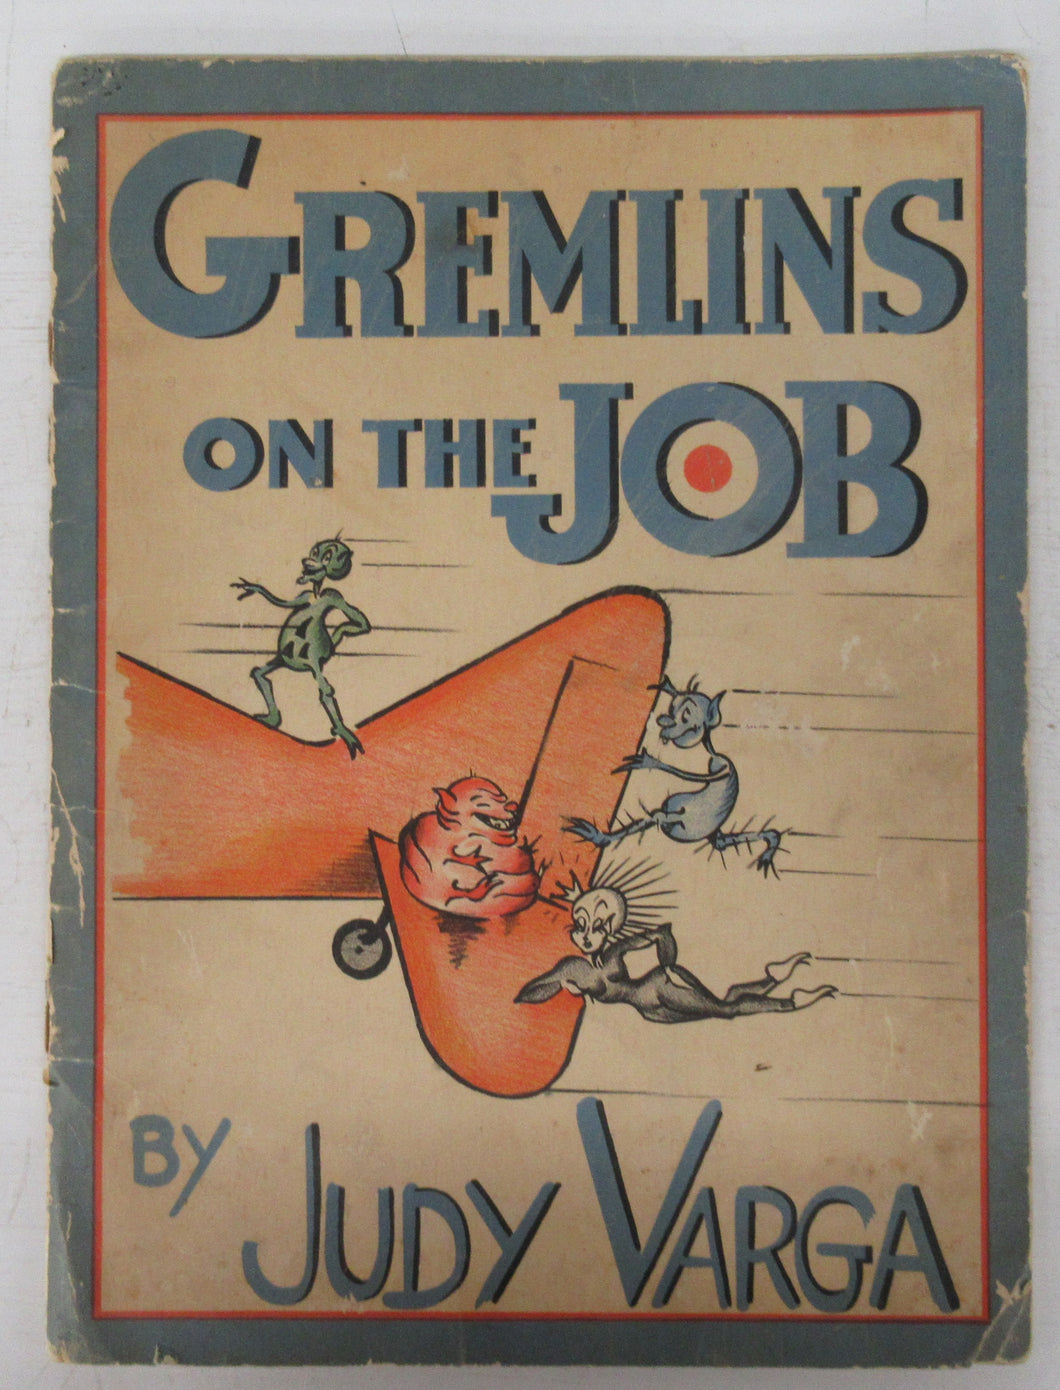 Gremlins on the Job